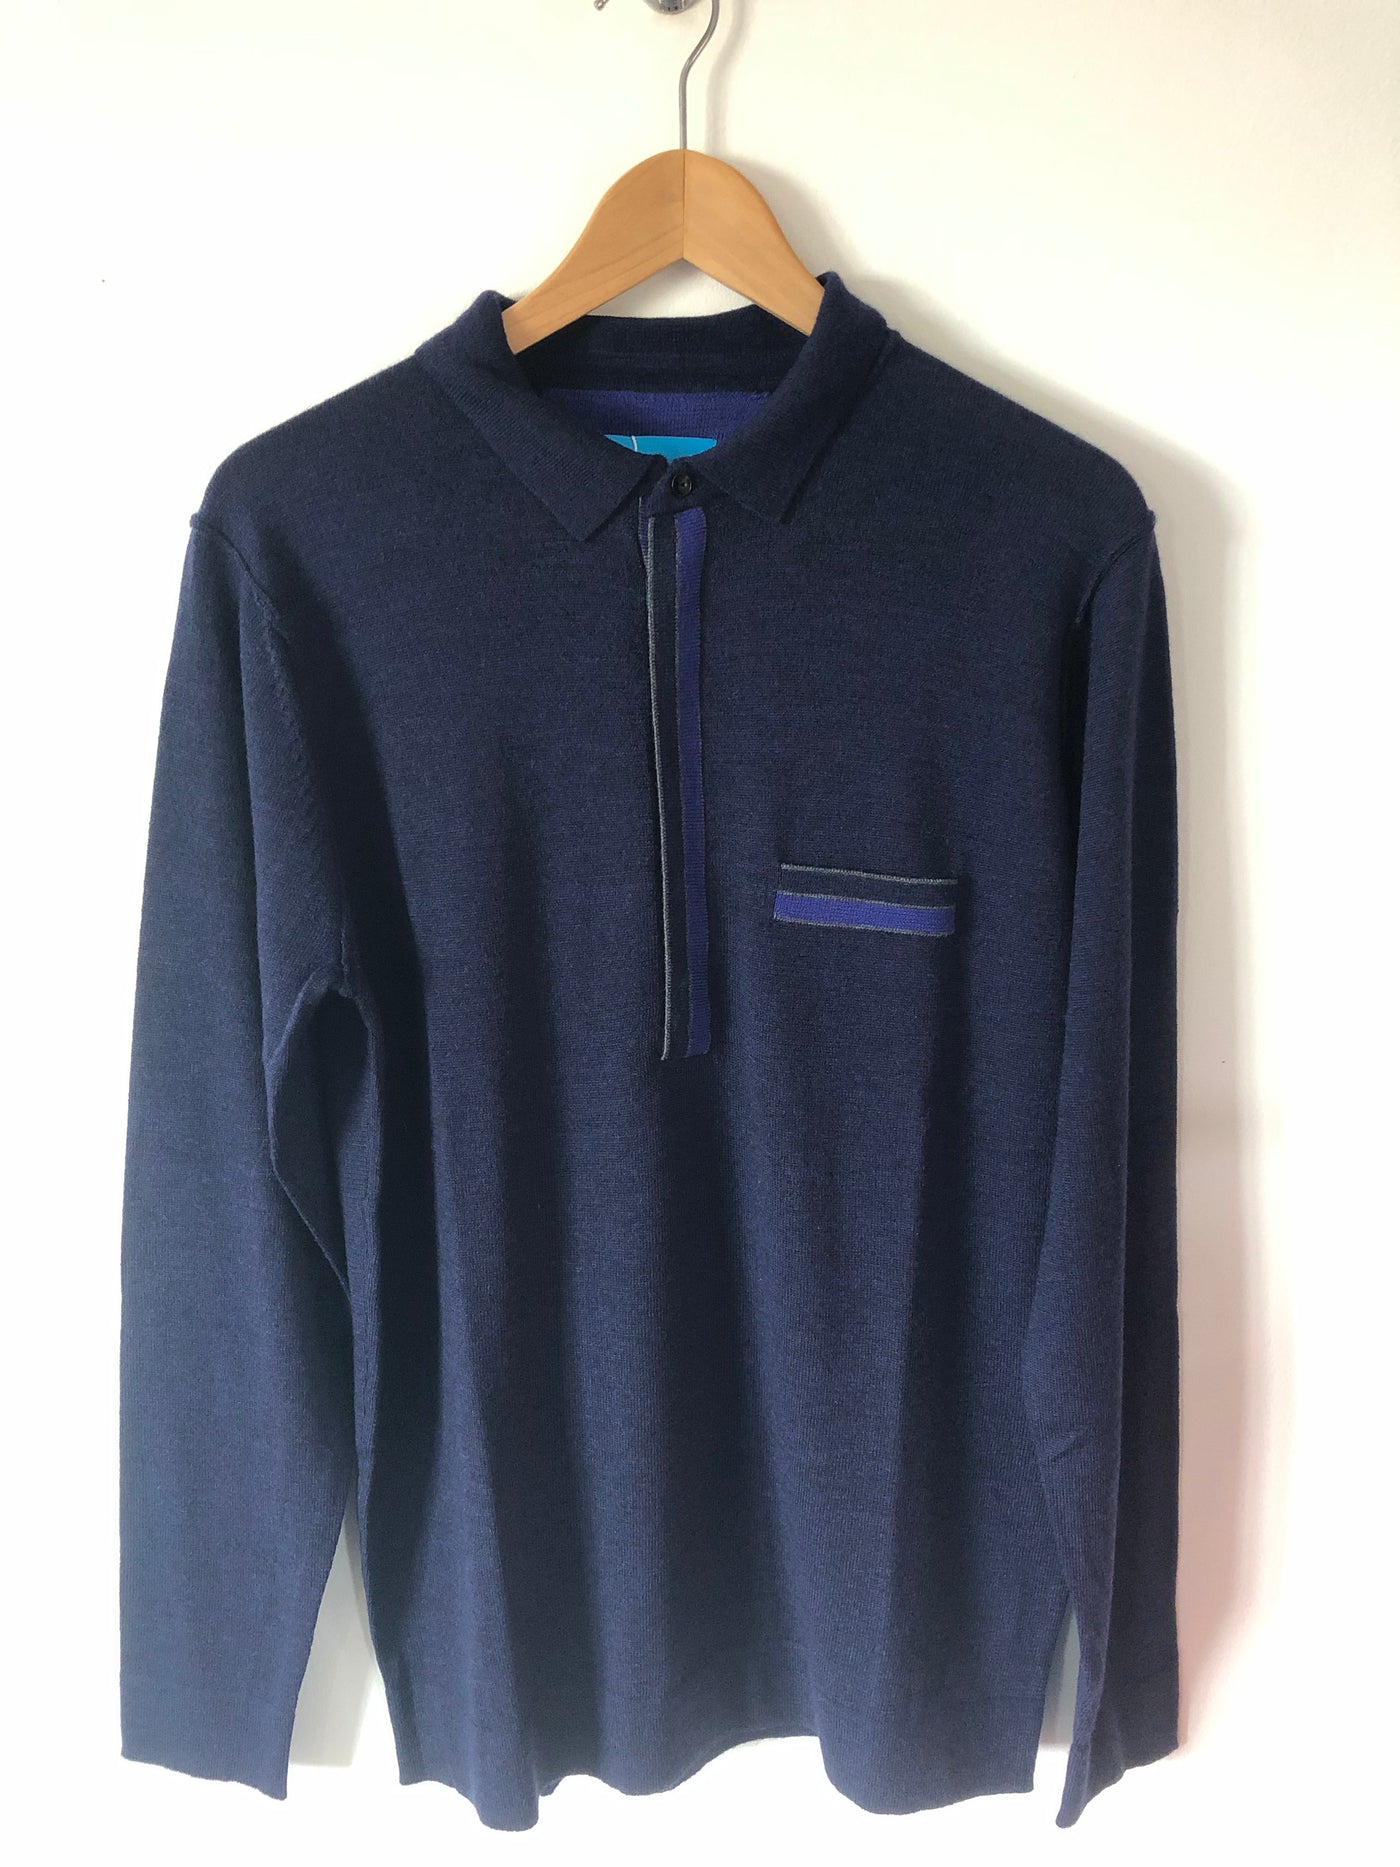 Merino Wool Knitted Polo Long Sleeve (Sample) - Navy Blue  - Multiple Sizes